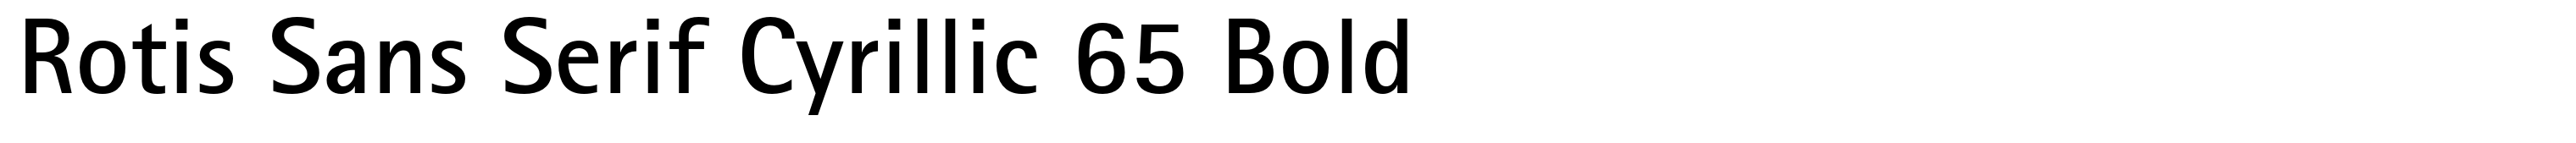 Rotis Sans Serif Cyrillic 65 Bold